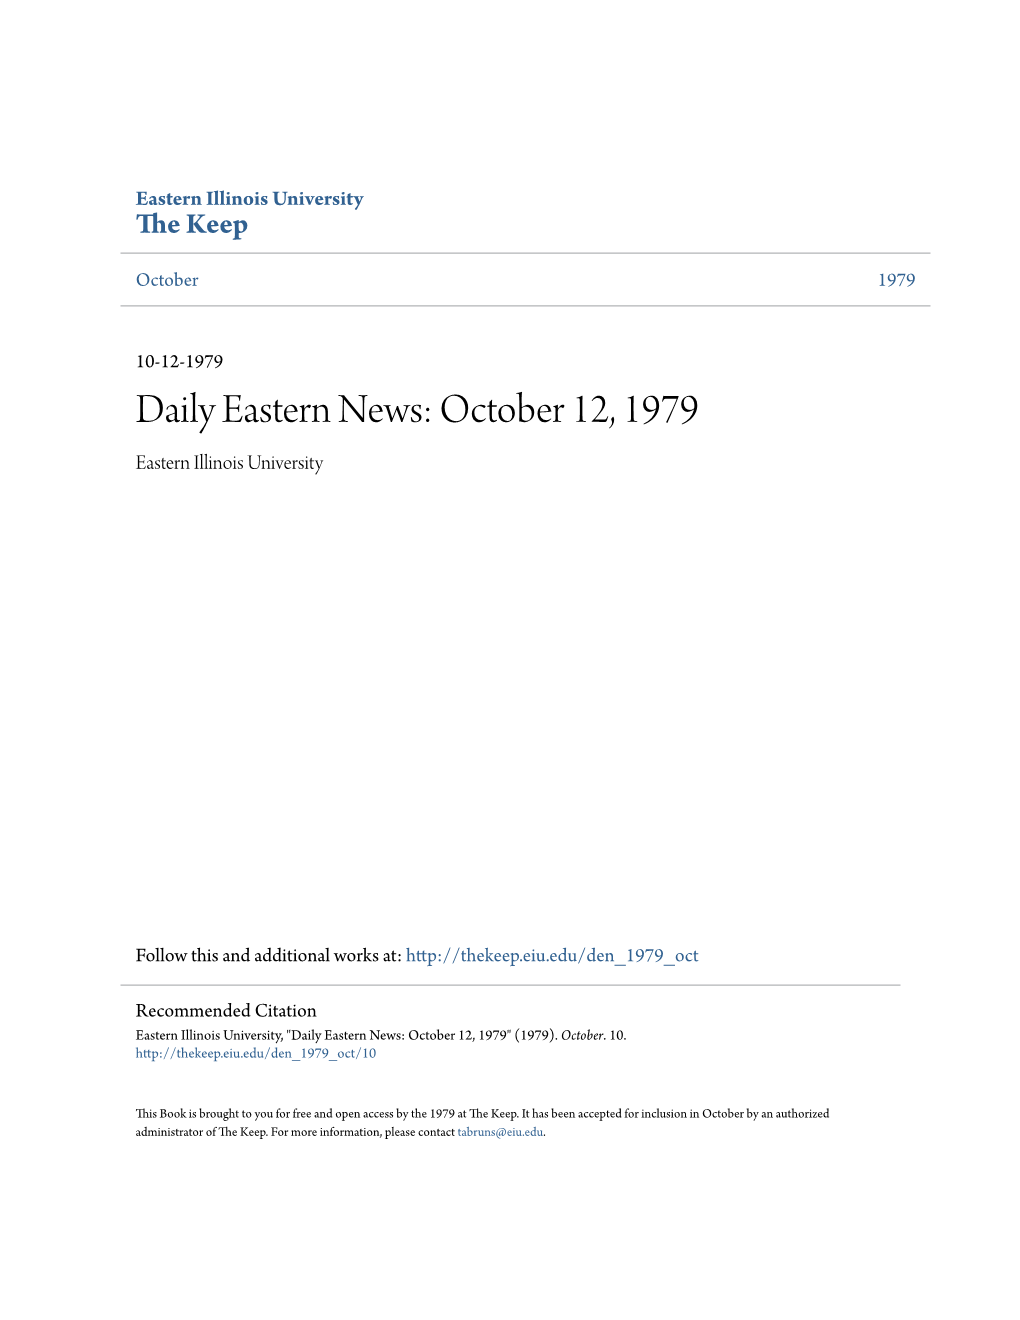 Daily Eastern News: October 12, 1979 Eastern Illinois University